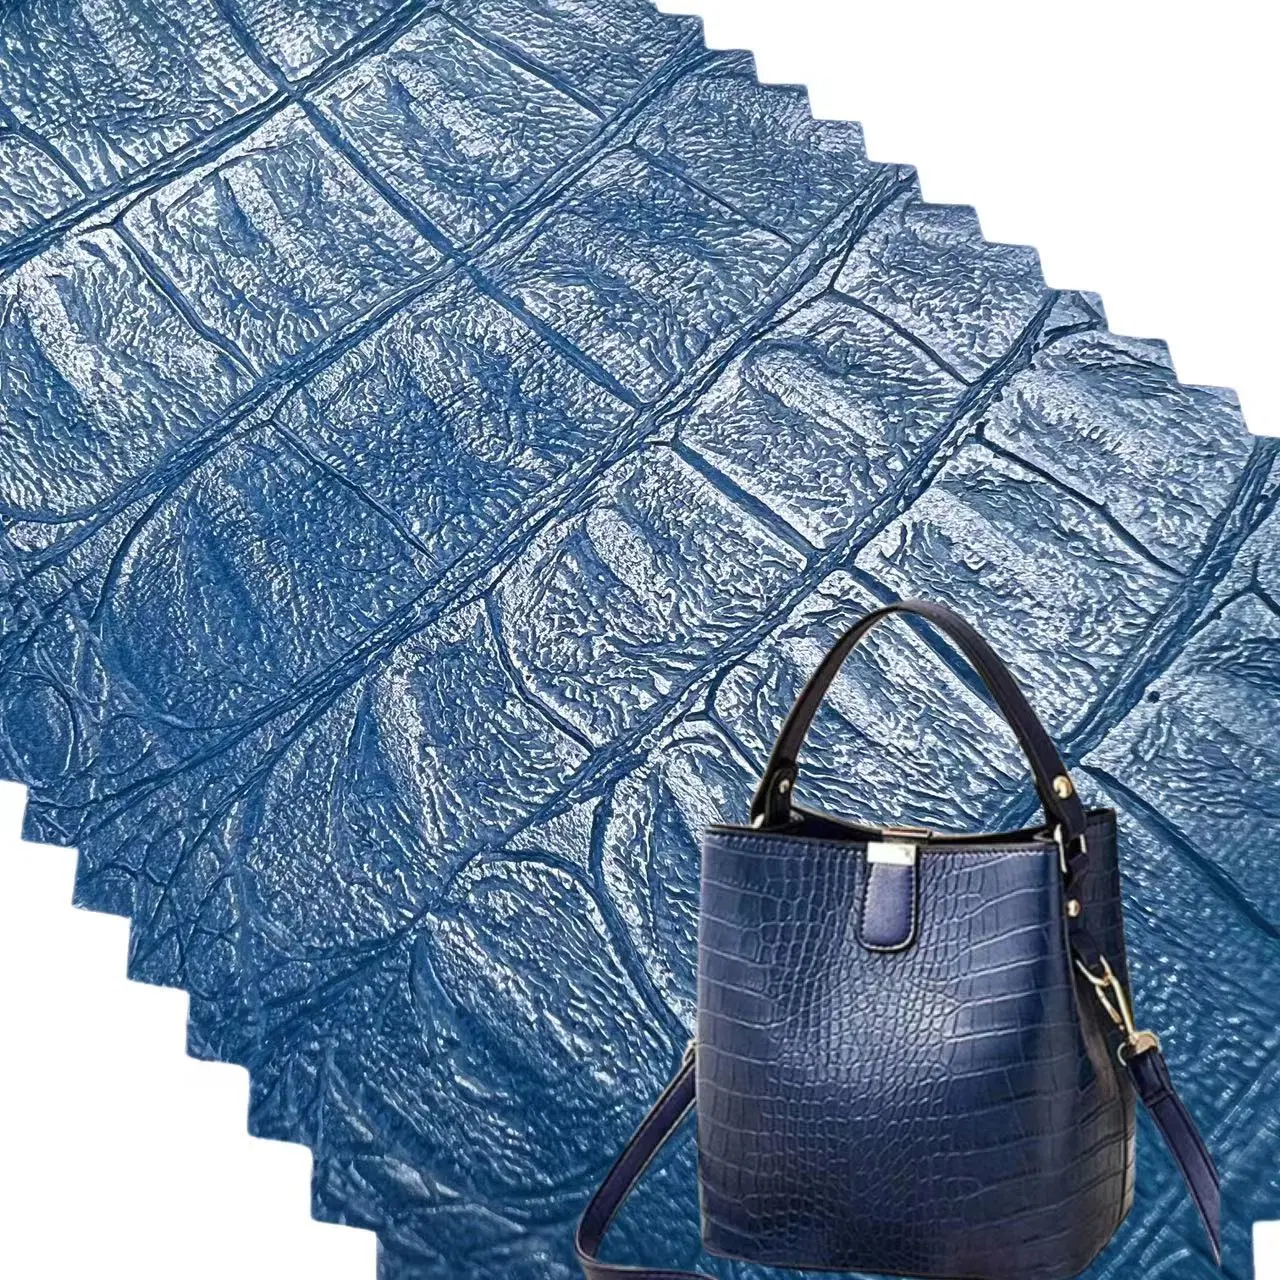 Blue Crocodile Skin 0.55mm PU Artificial Leather for Handbags